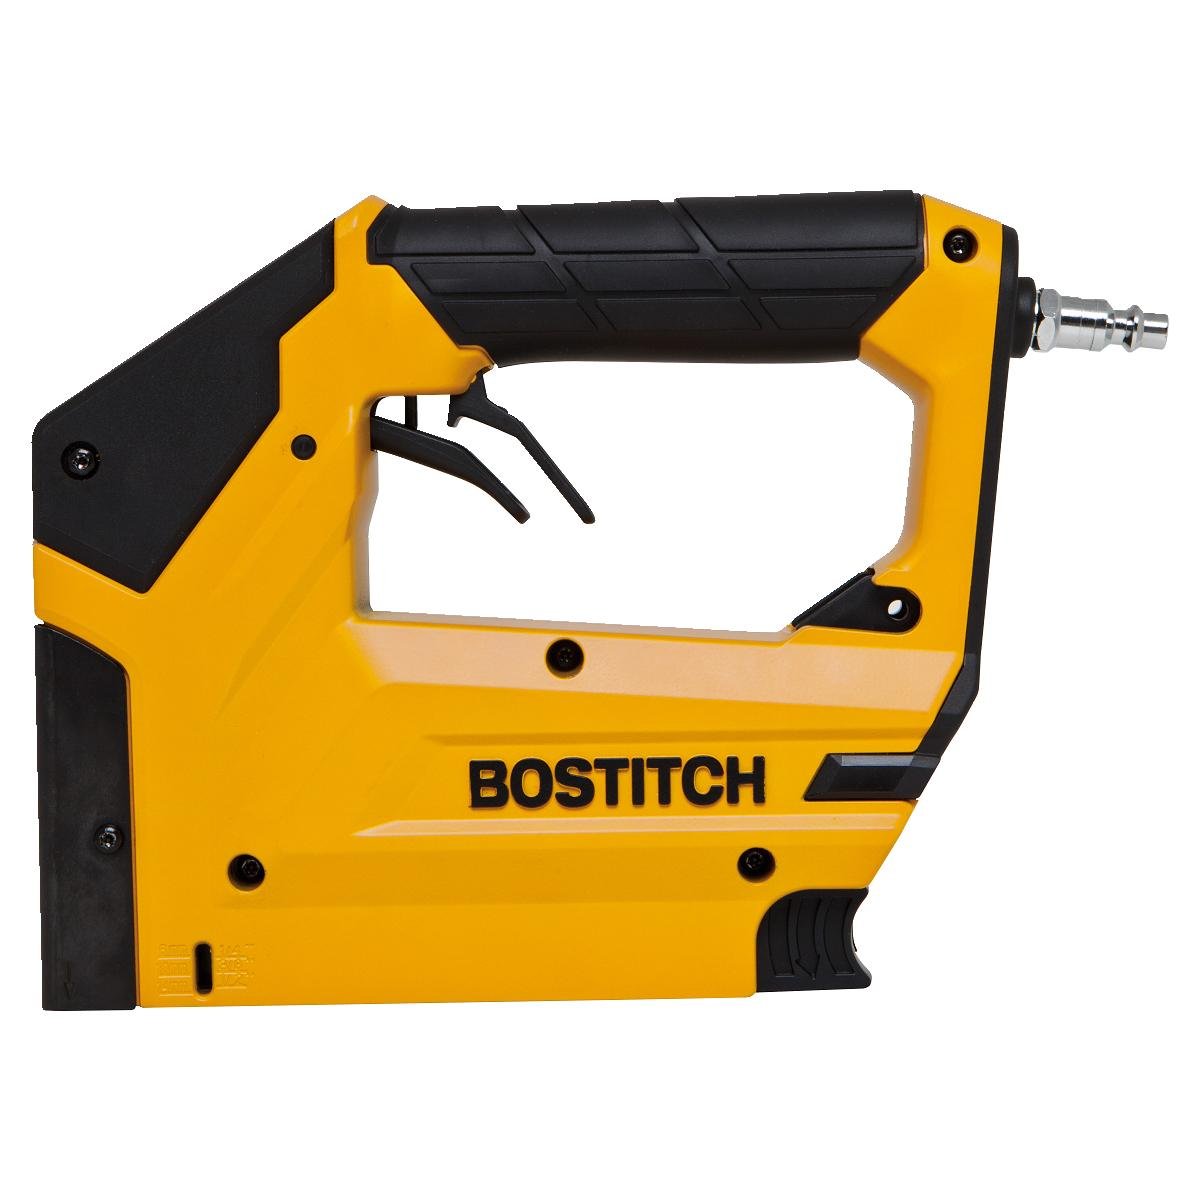 Bostitch Air Compressor Combo Kit, 3-Tool (BTFP3KIT) 21.1 x 19.5 x 18 inches